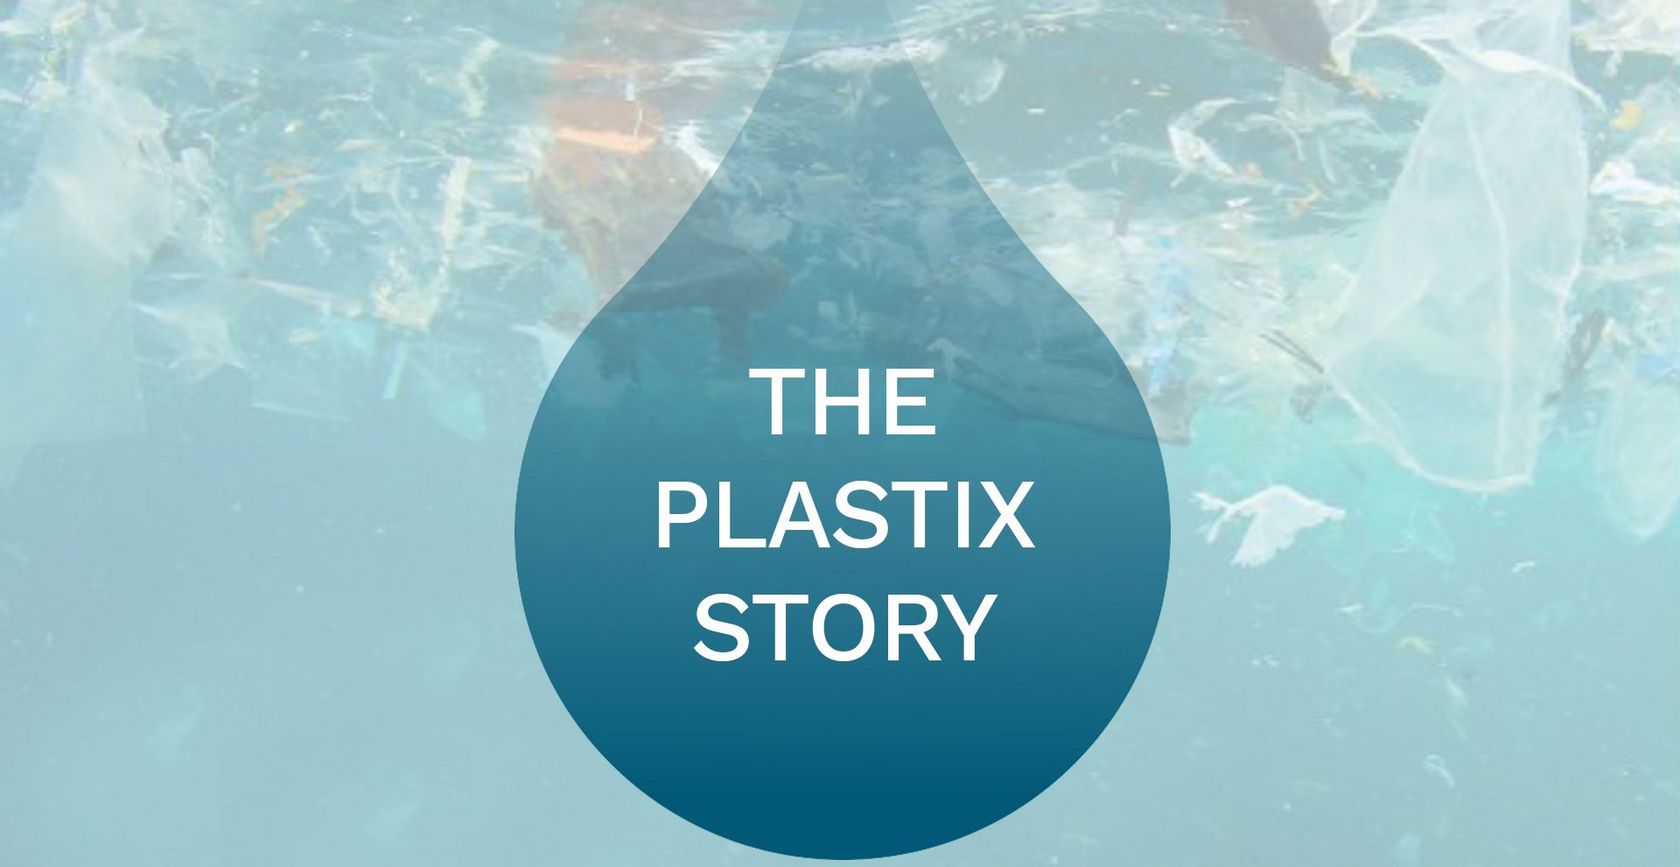 The plastix story